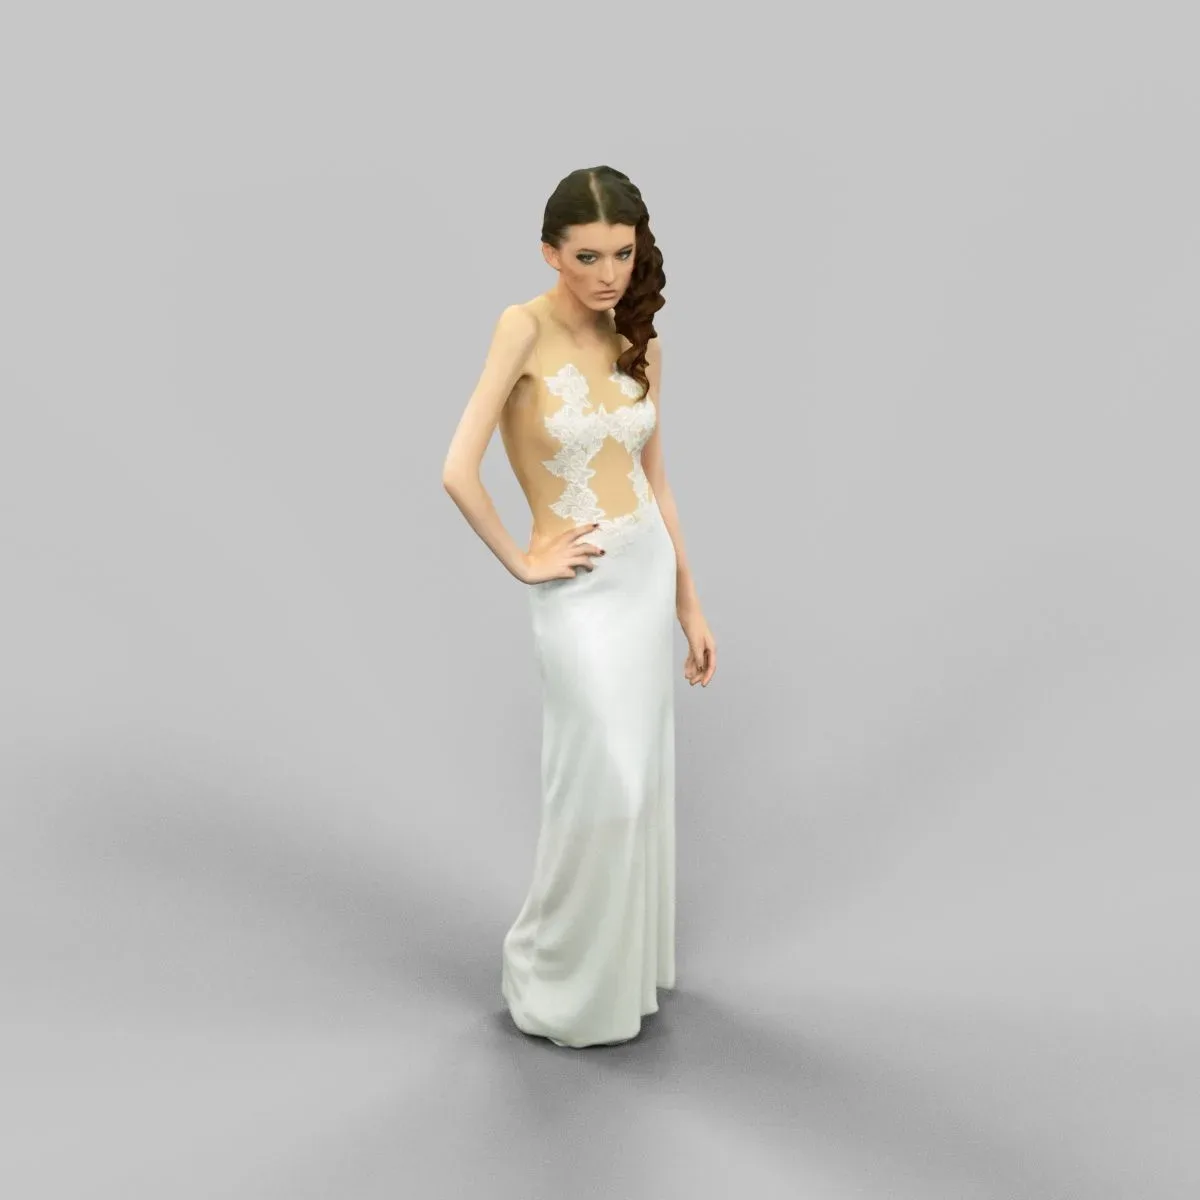 Fashionable Woman Posing in Long White Dress